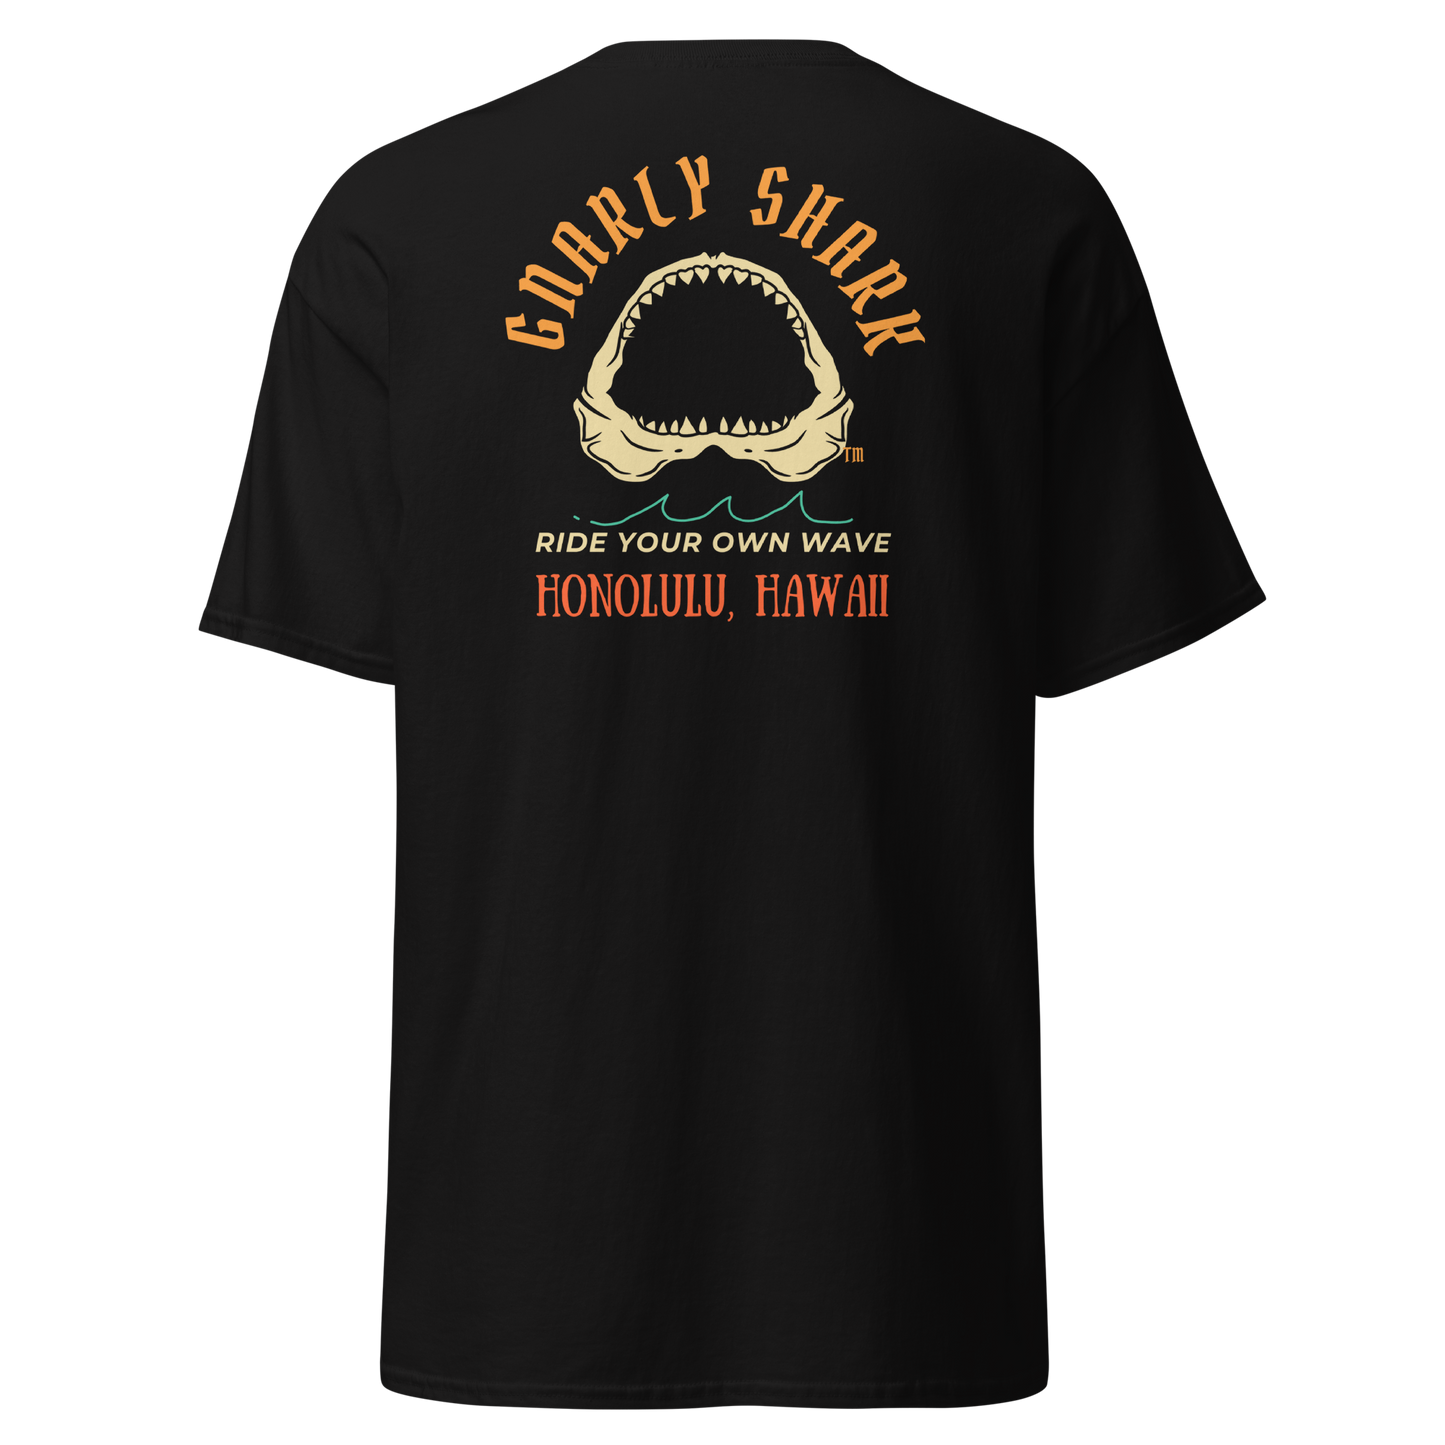 Gnarly Shark Honolulu Hawaii T-Shirt - Front / Back - Gildan classic 5000